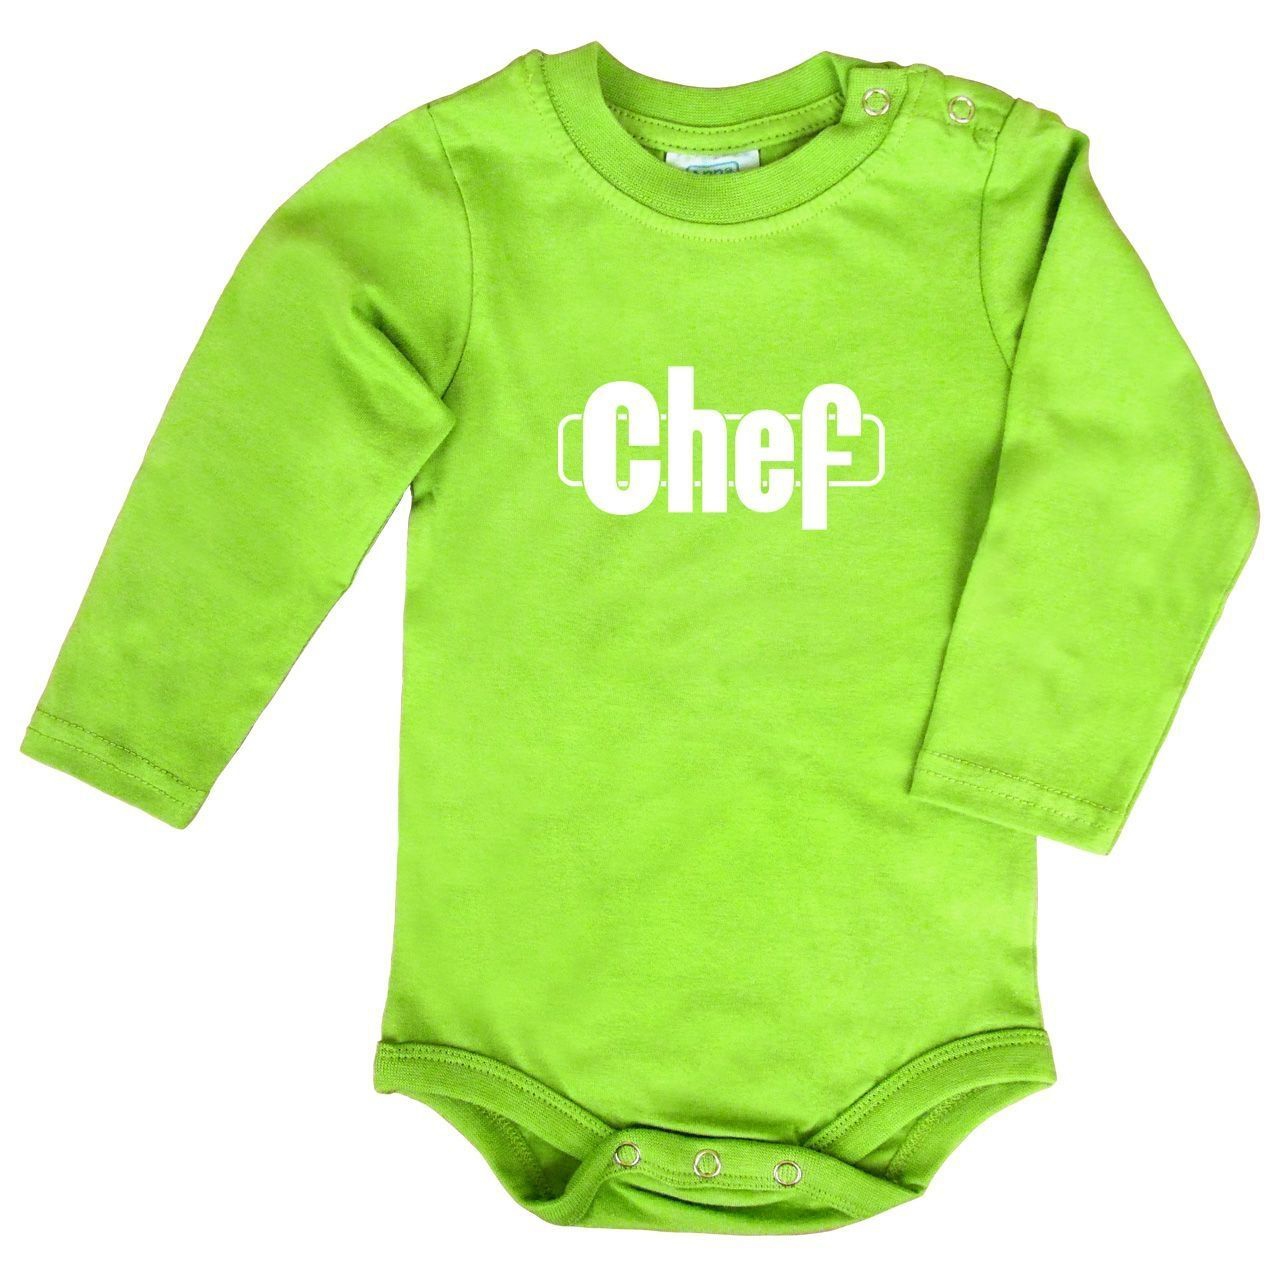 Chef Baby Body Langarm hellgrün 68 / 74